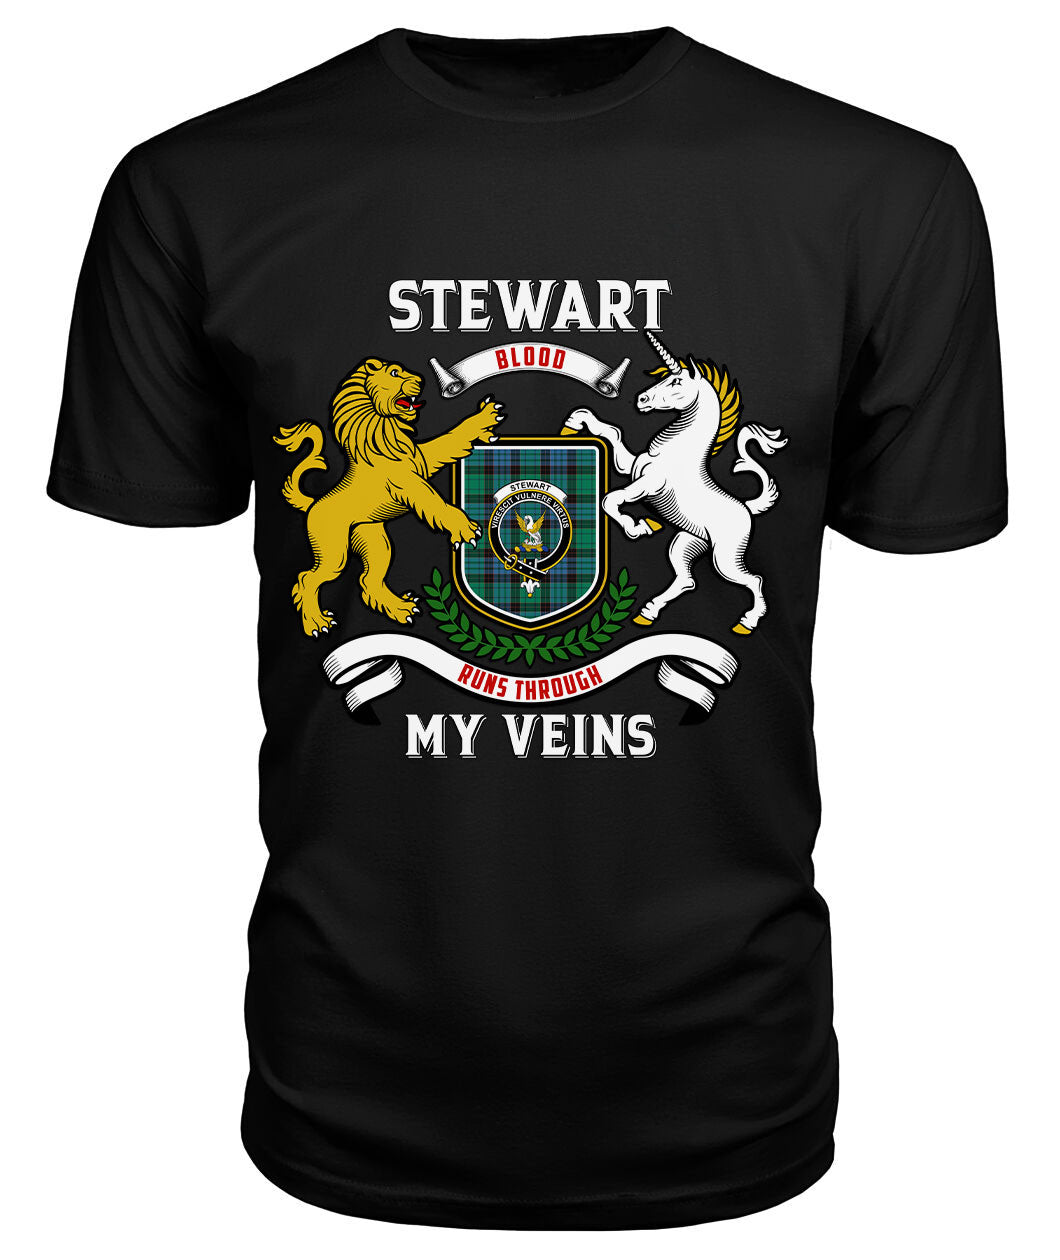 Stewart Old Ancient Tartan Crest 2D T-shirt - Blood Runs Through My Veins Style